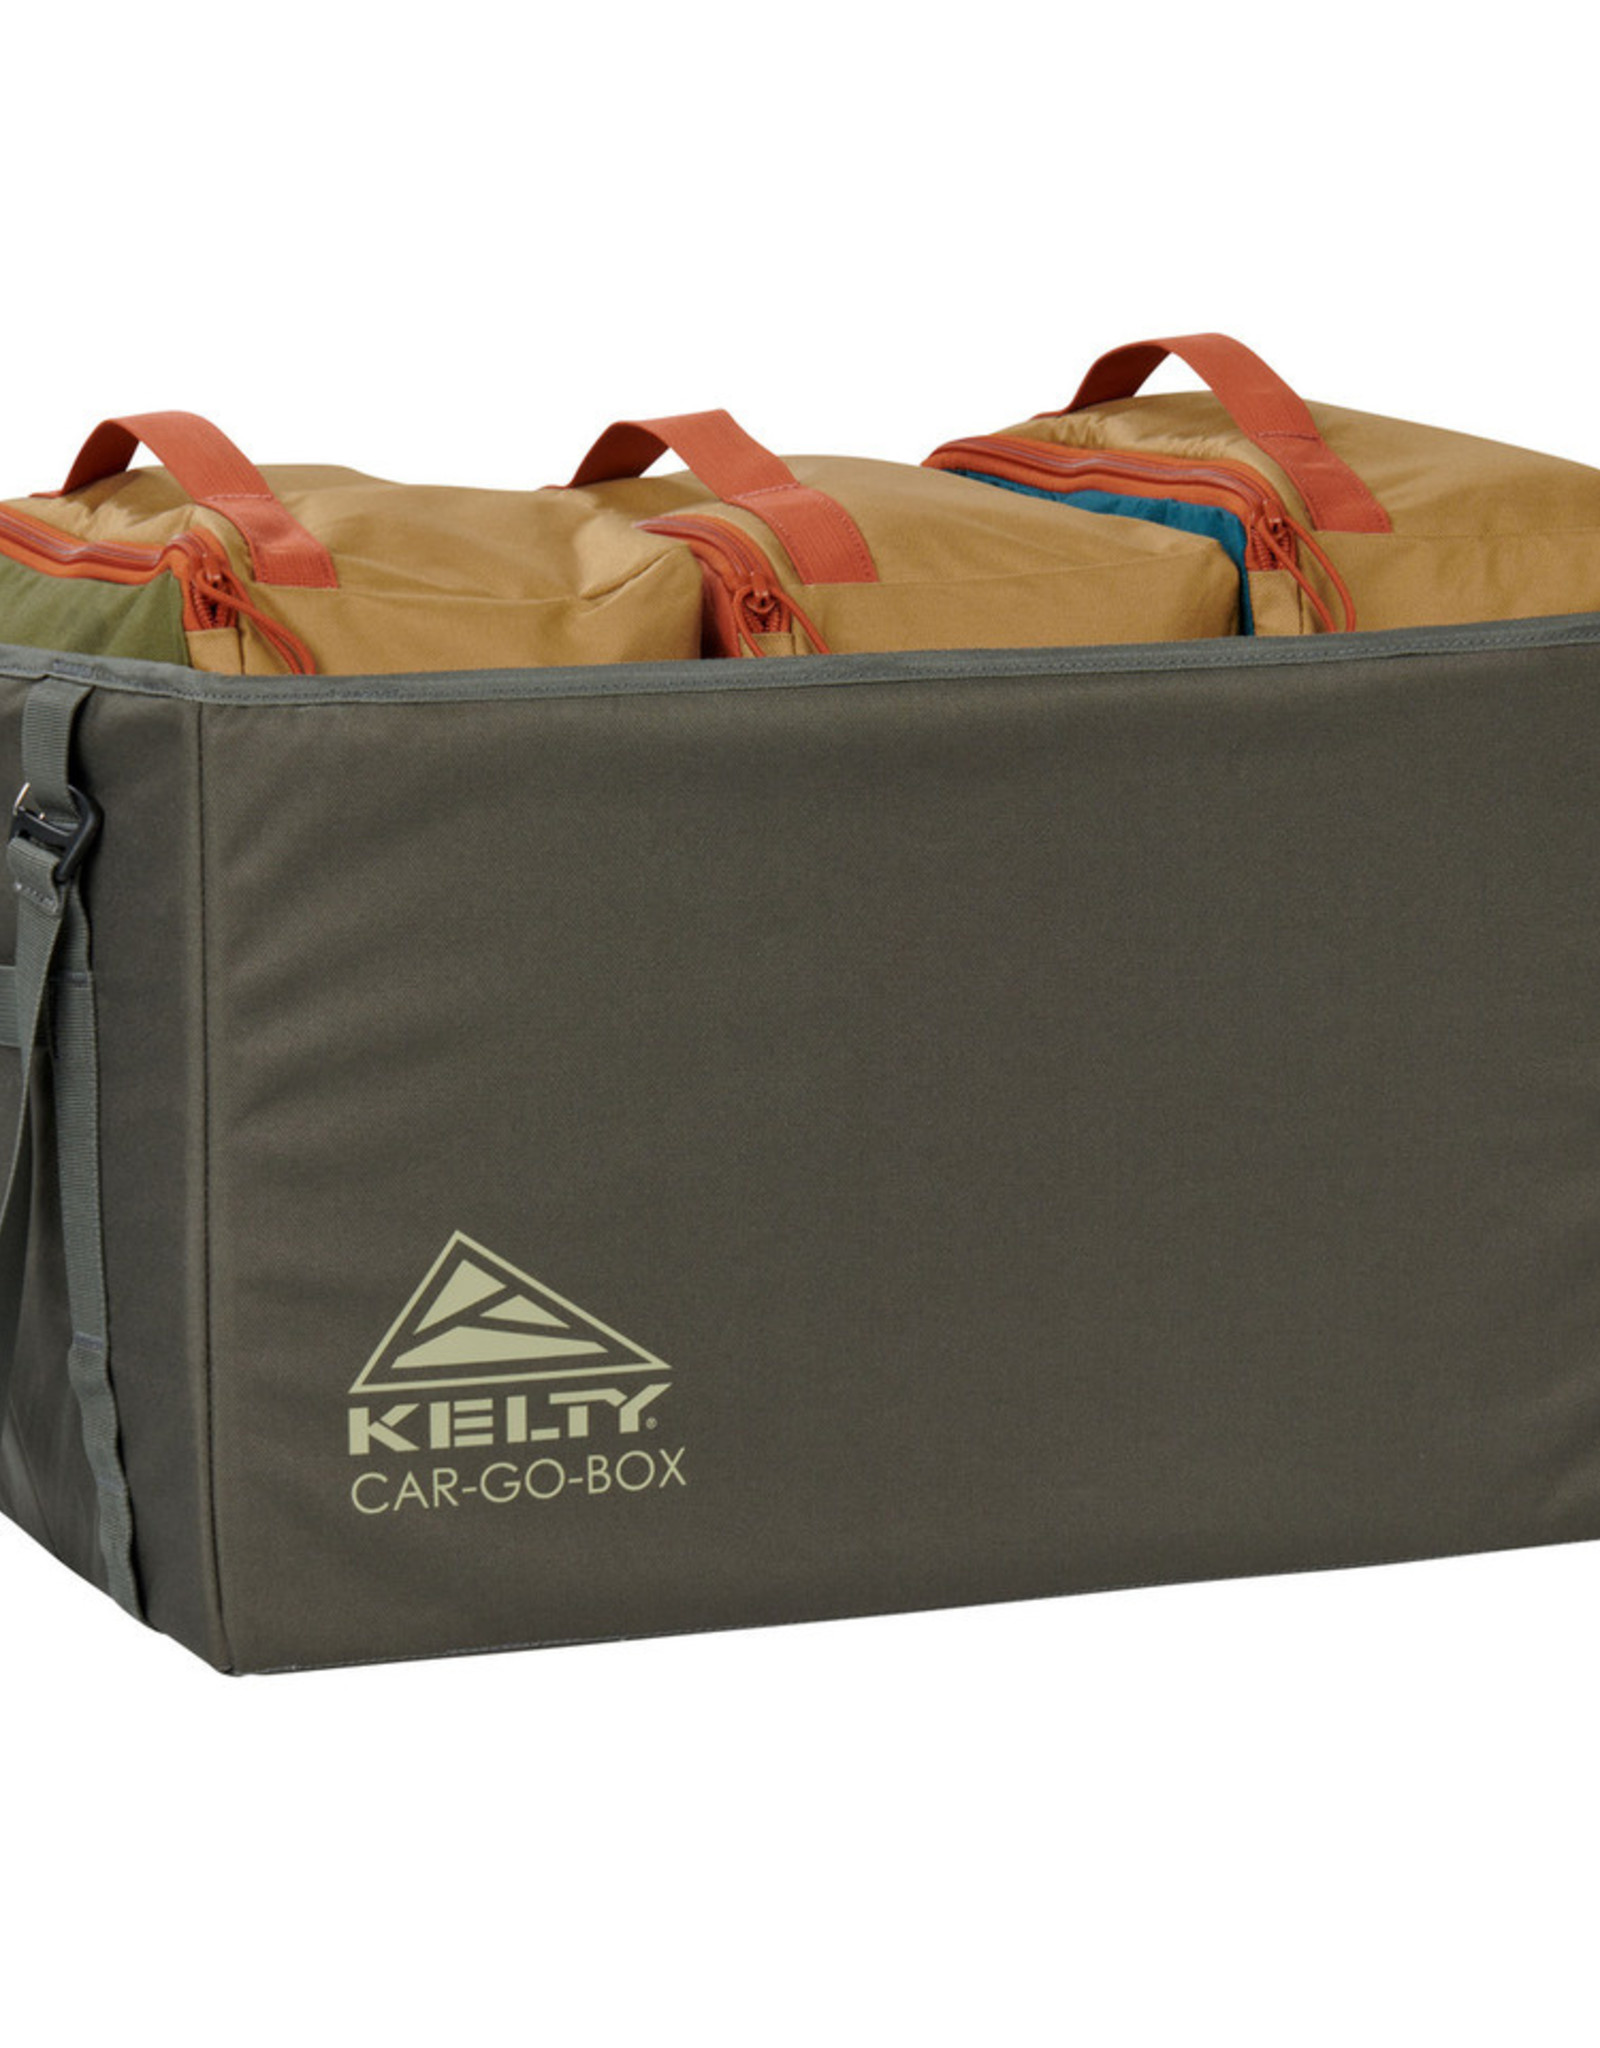 Kelty Kelty Car-Go-Box Camp Organizer